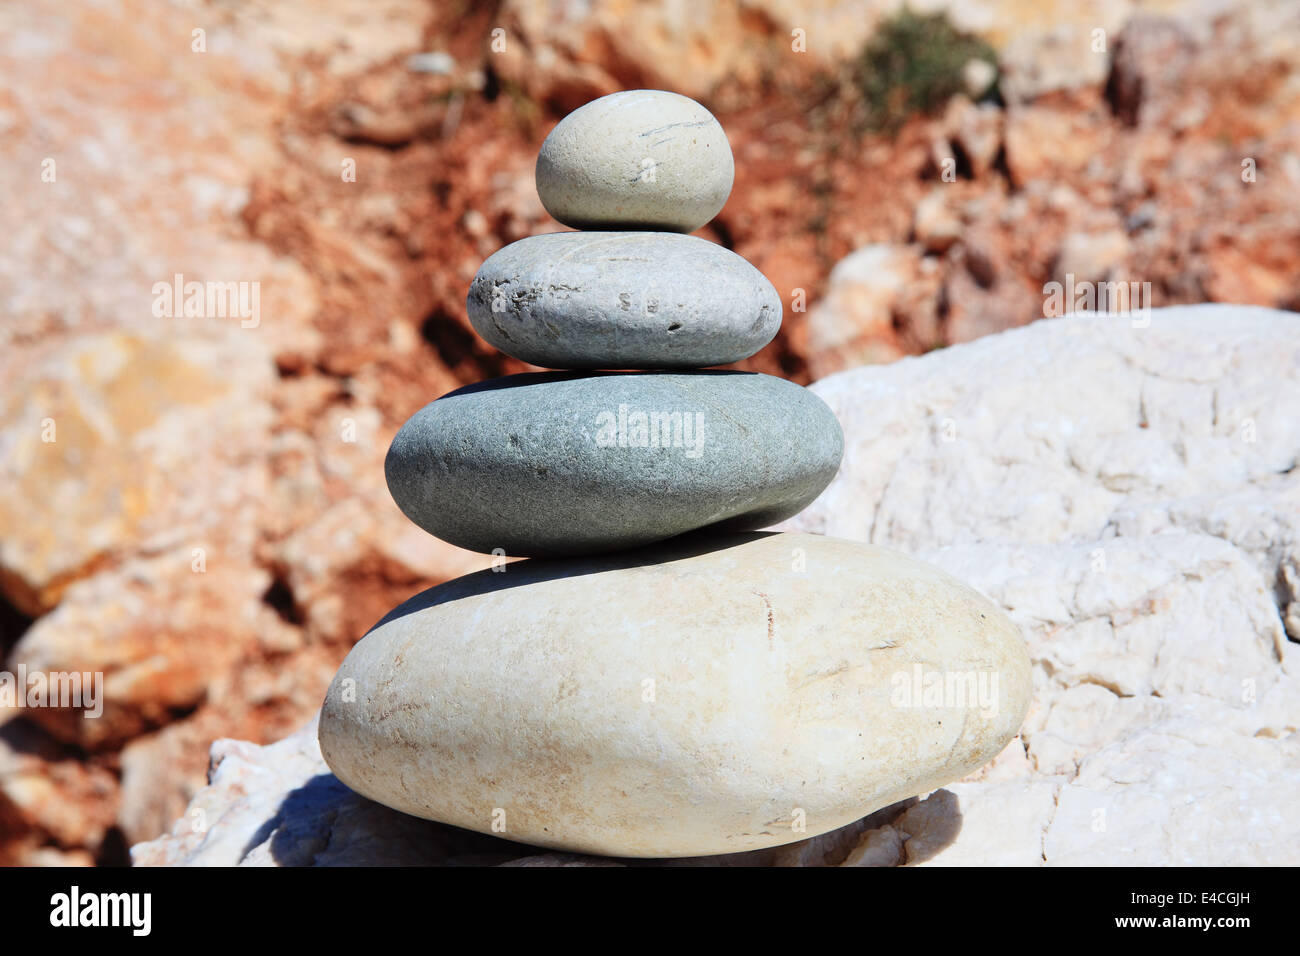 Balanced rocks in a zen-like arrangement Stock Photo